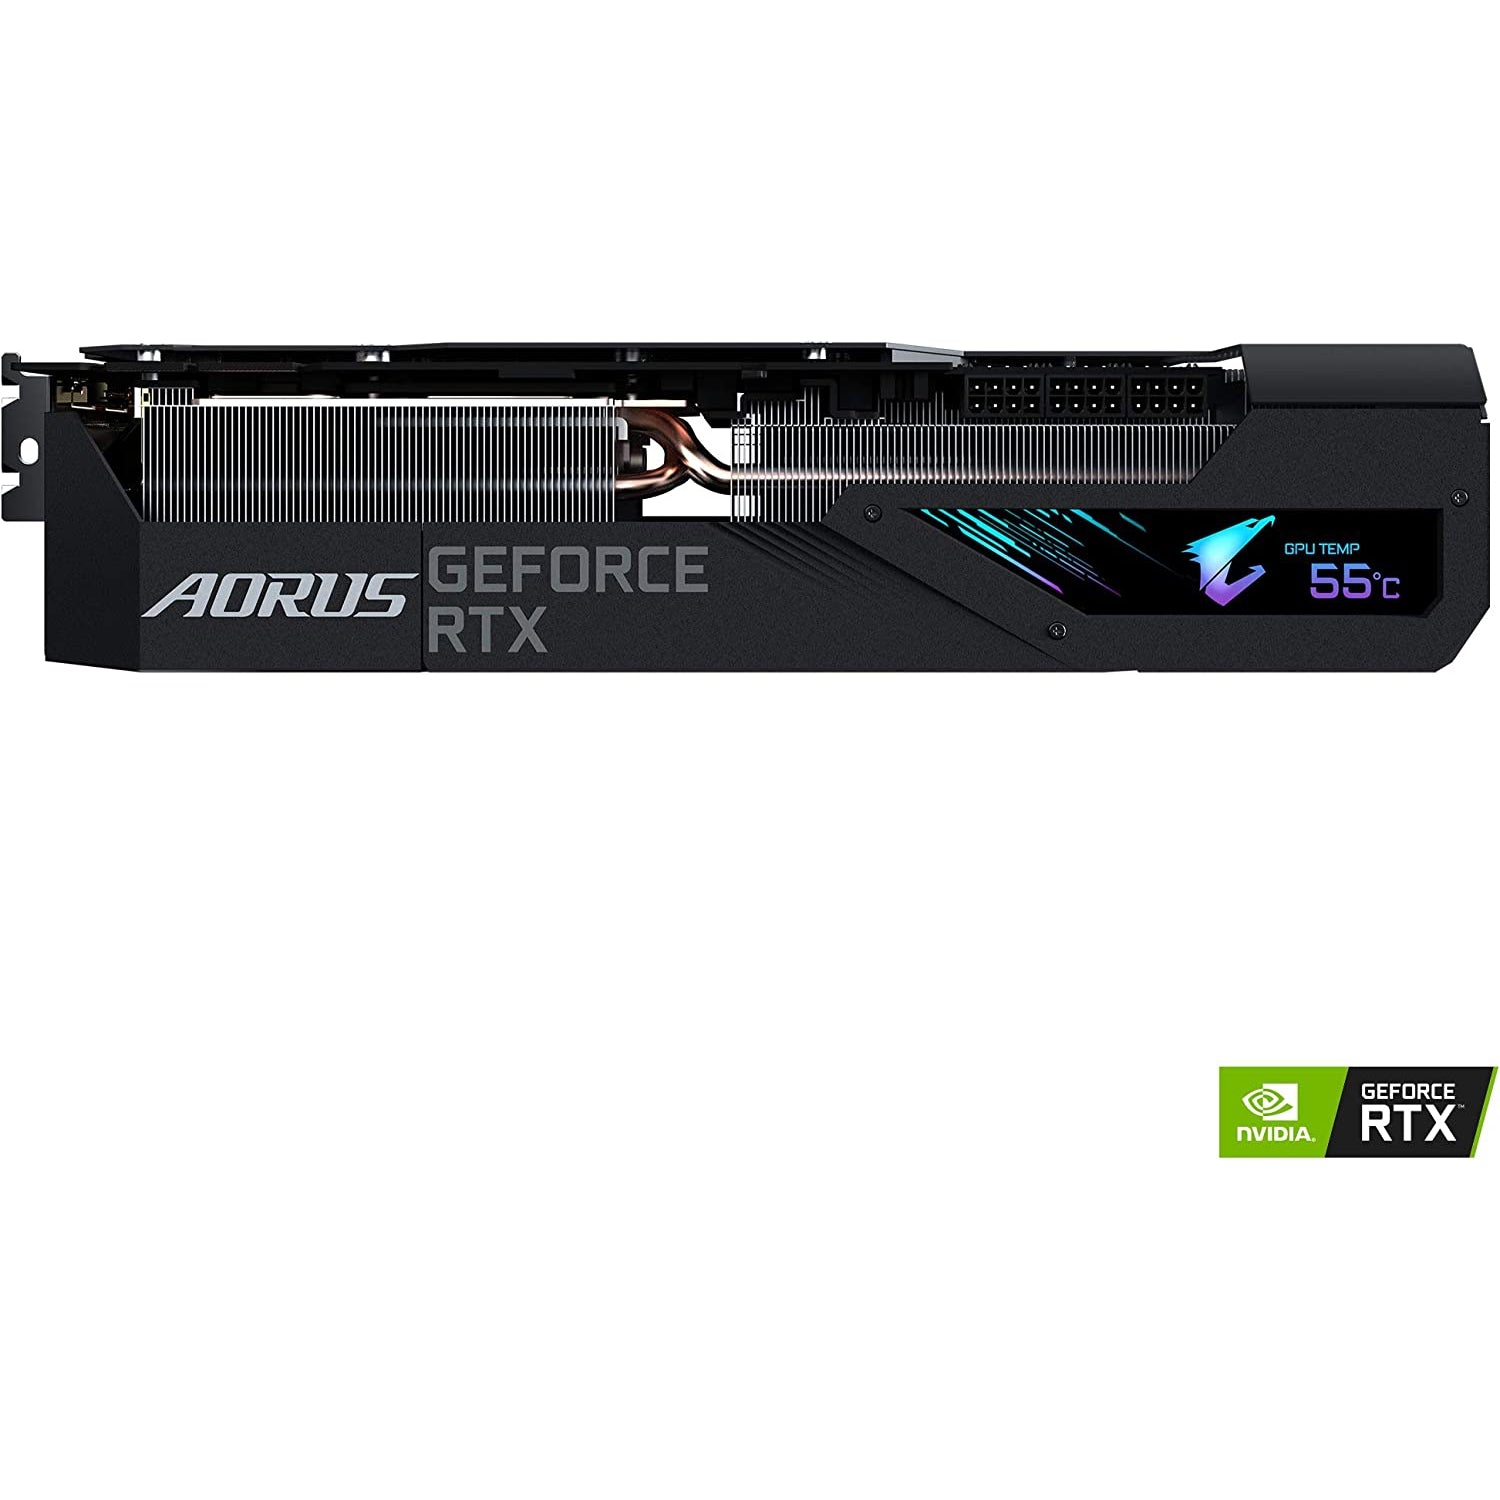 Gigabyte Aorus GeForce RTX 3090 Xtreme 24GB GDDR6X Graphics Card